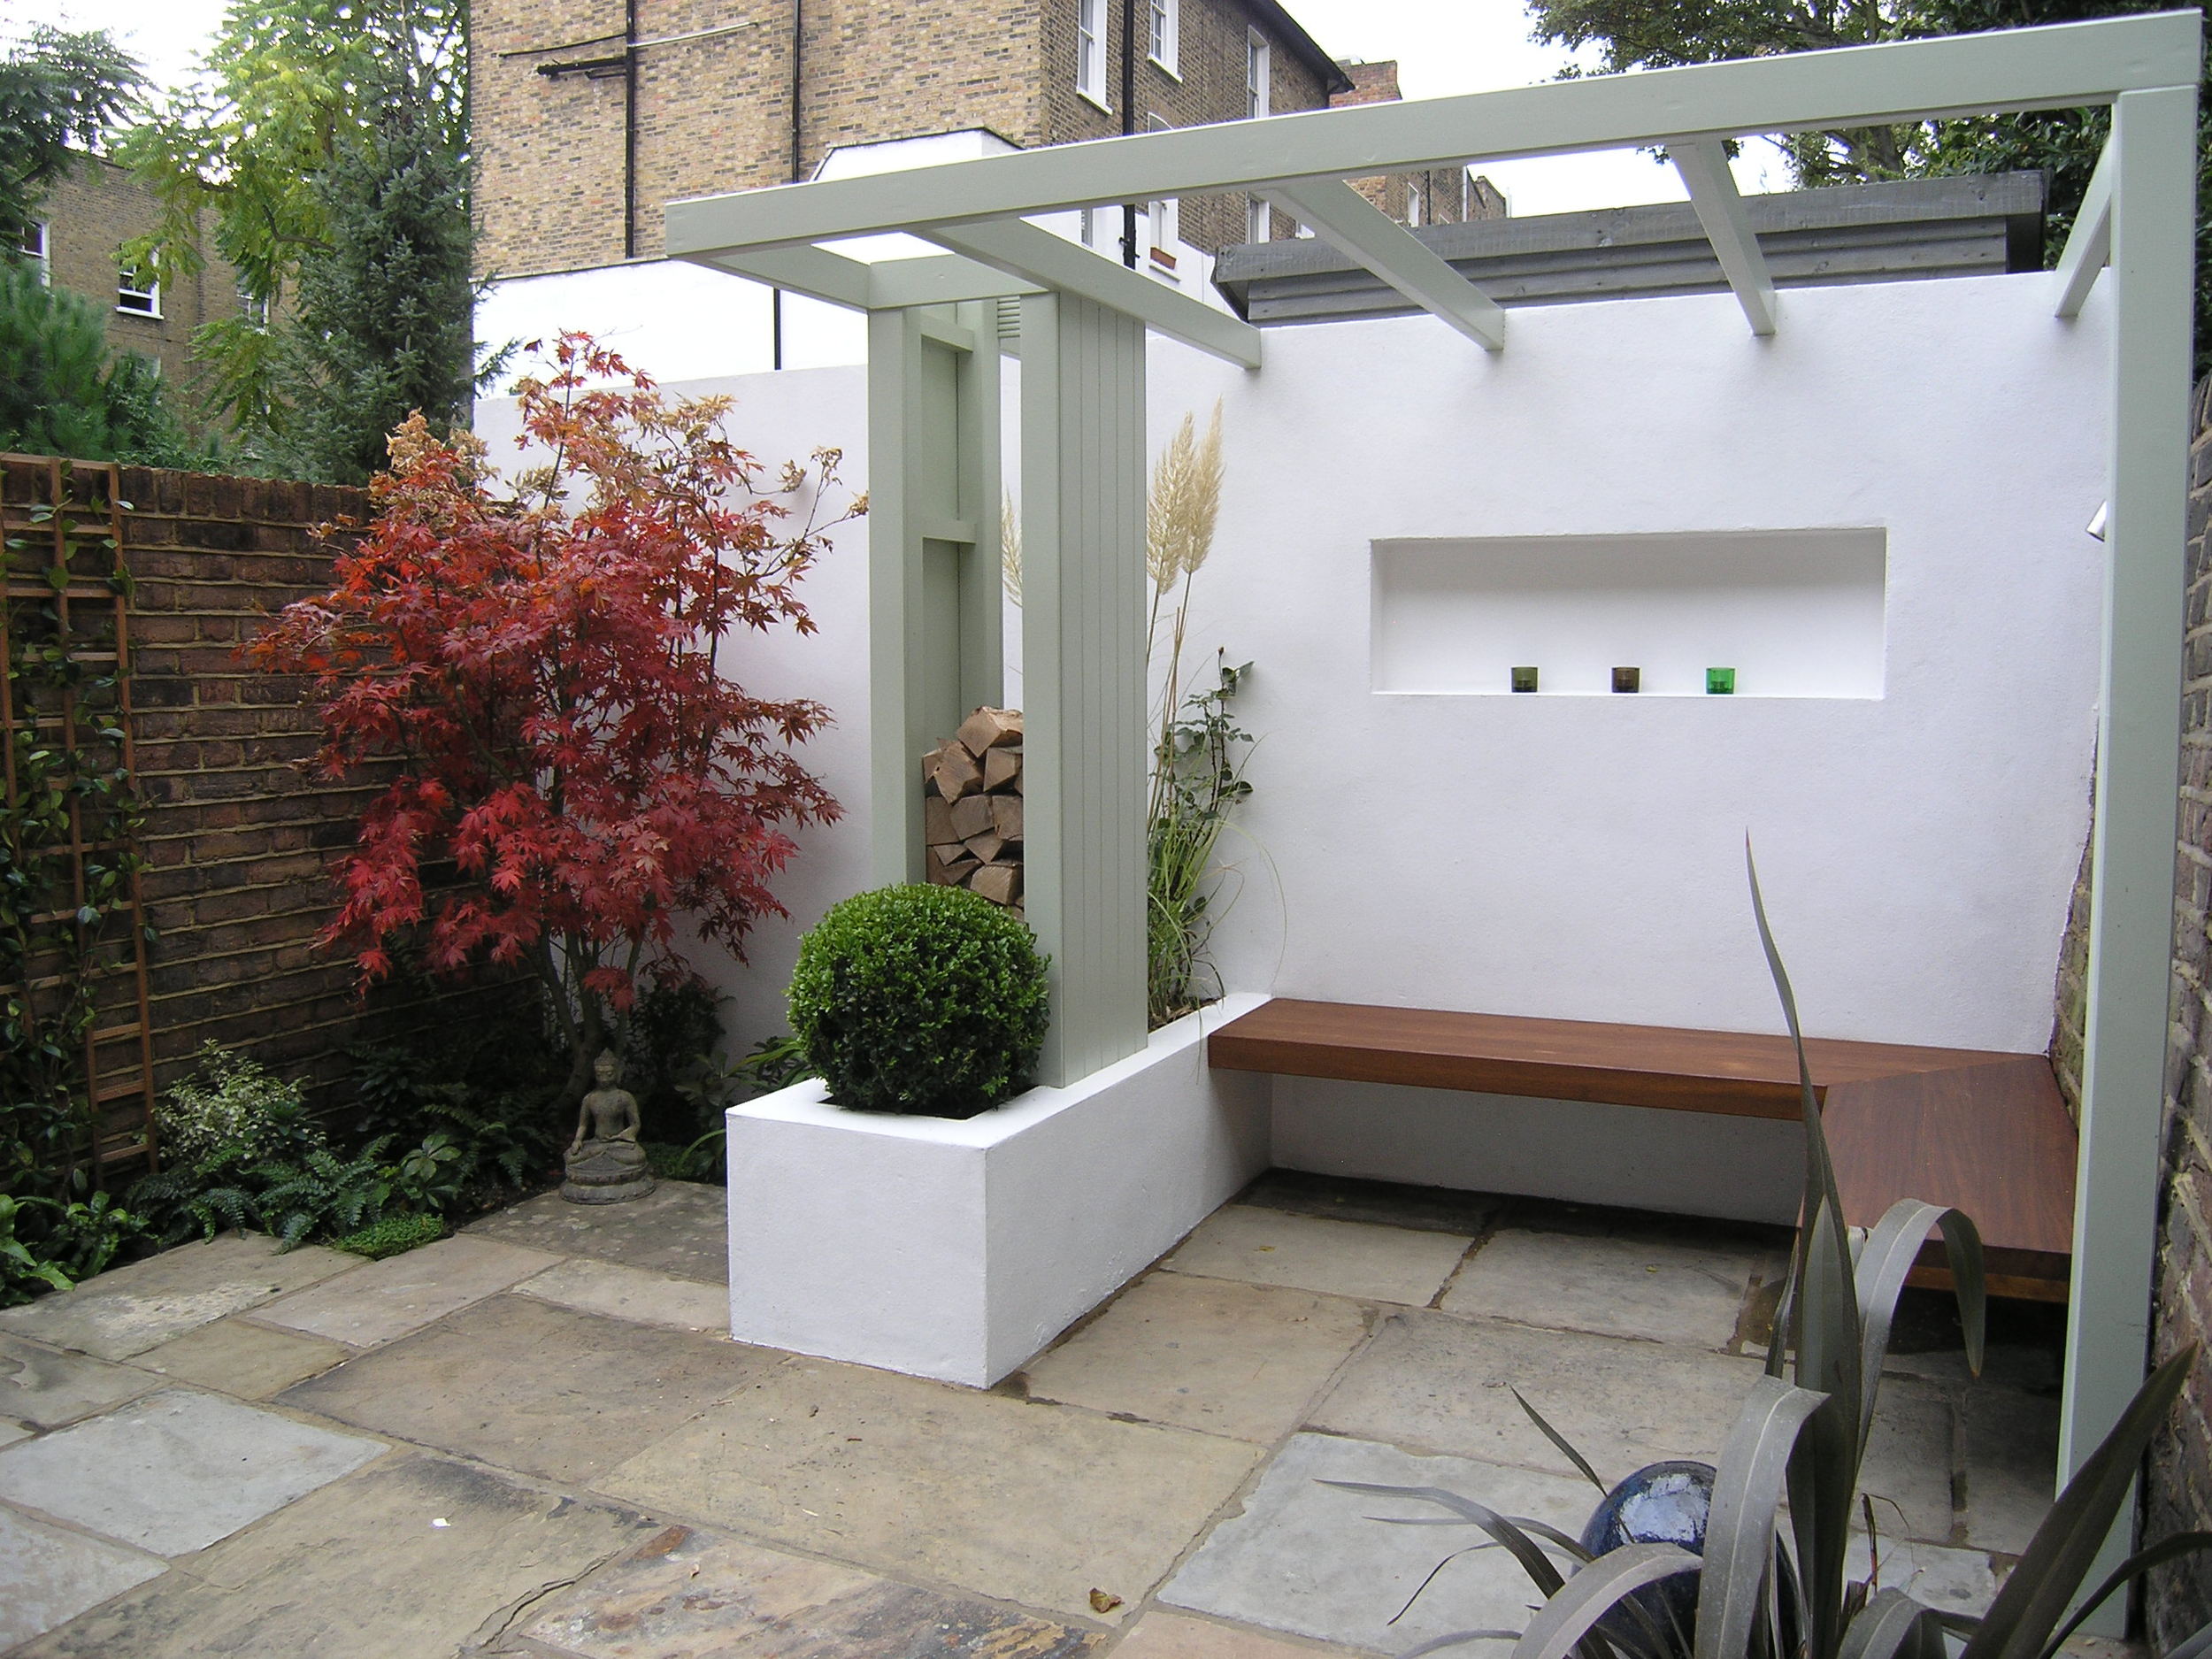 Contemporary Islington garden design with Yorkstone patio and planting